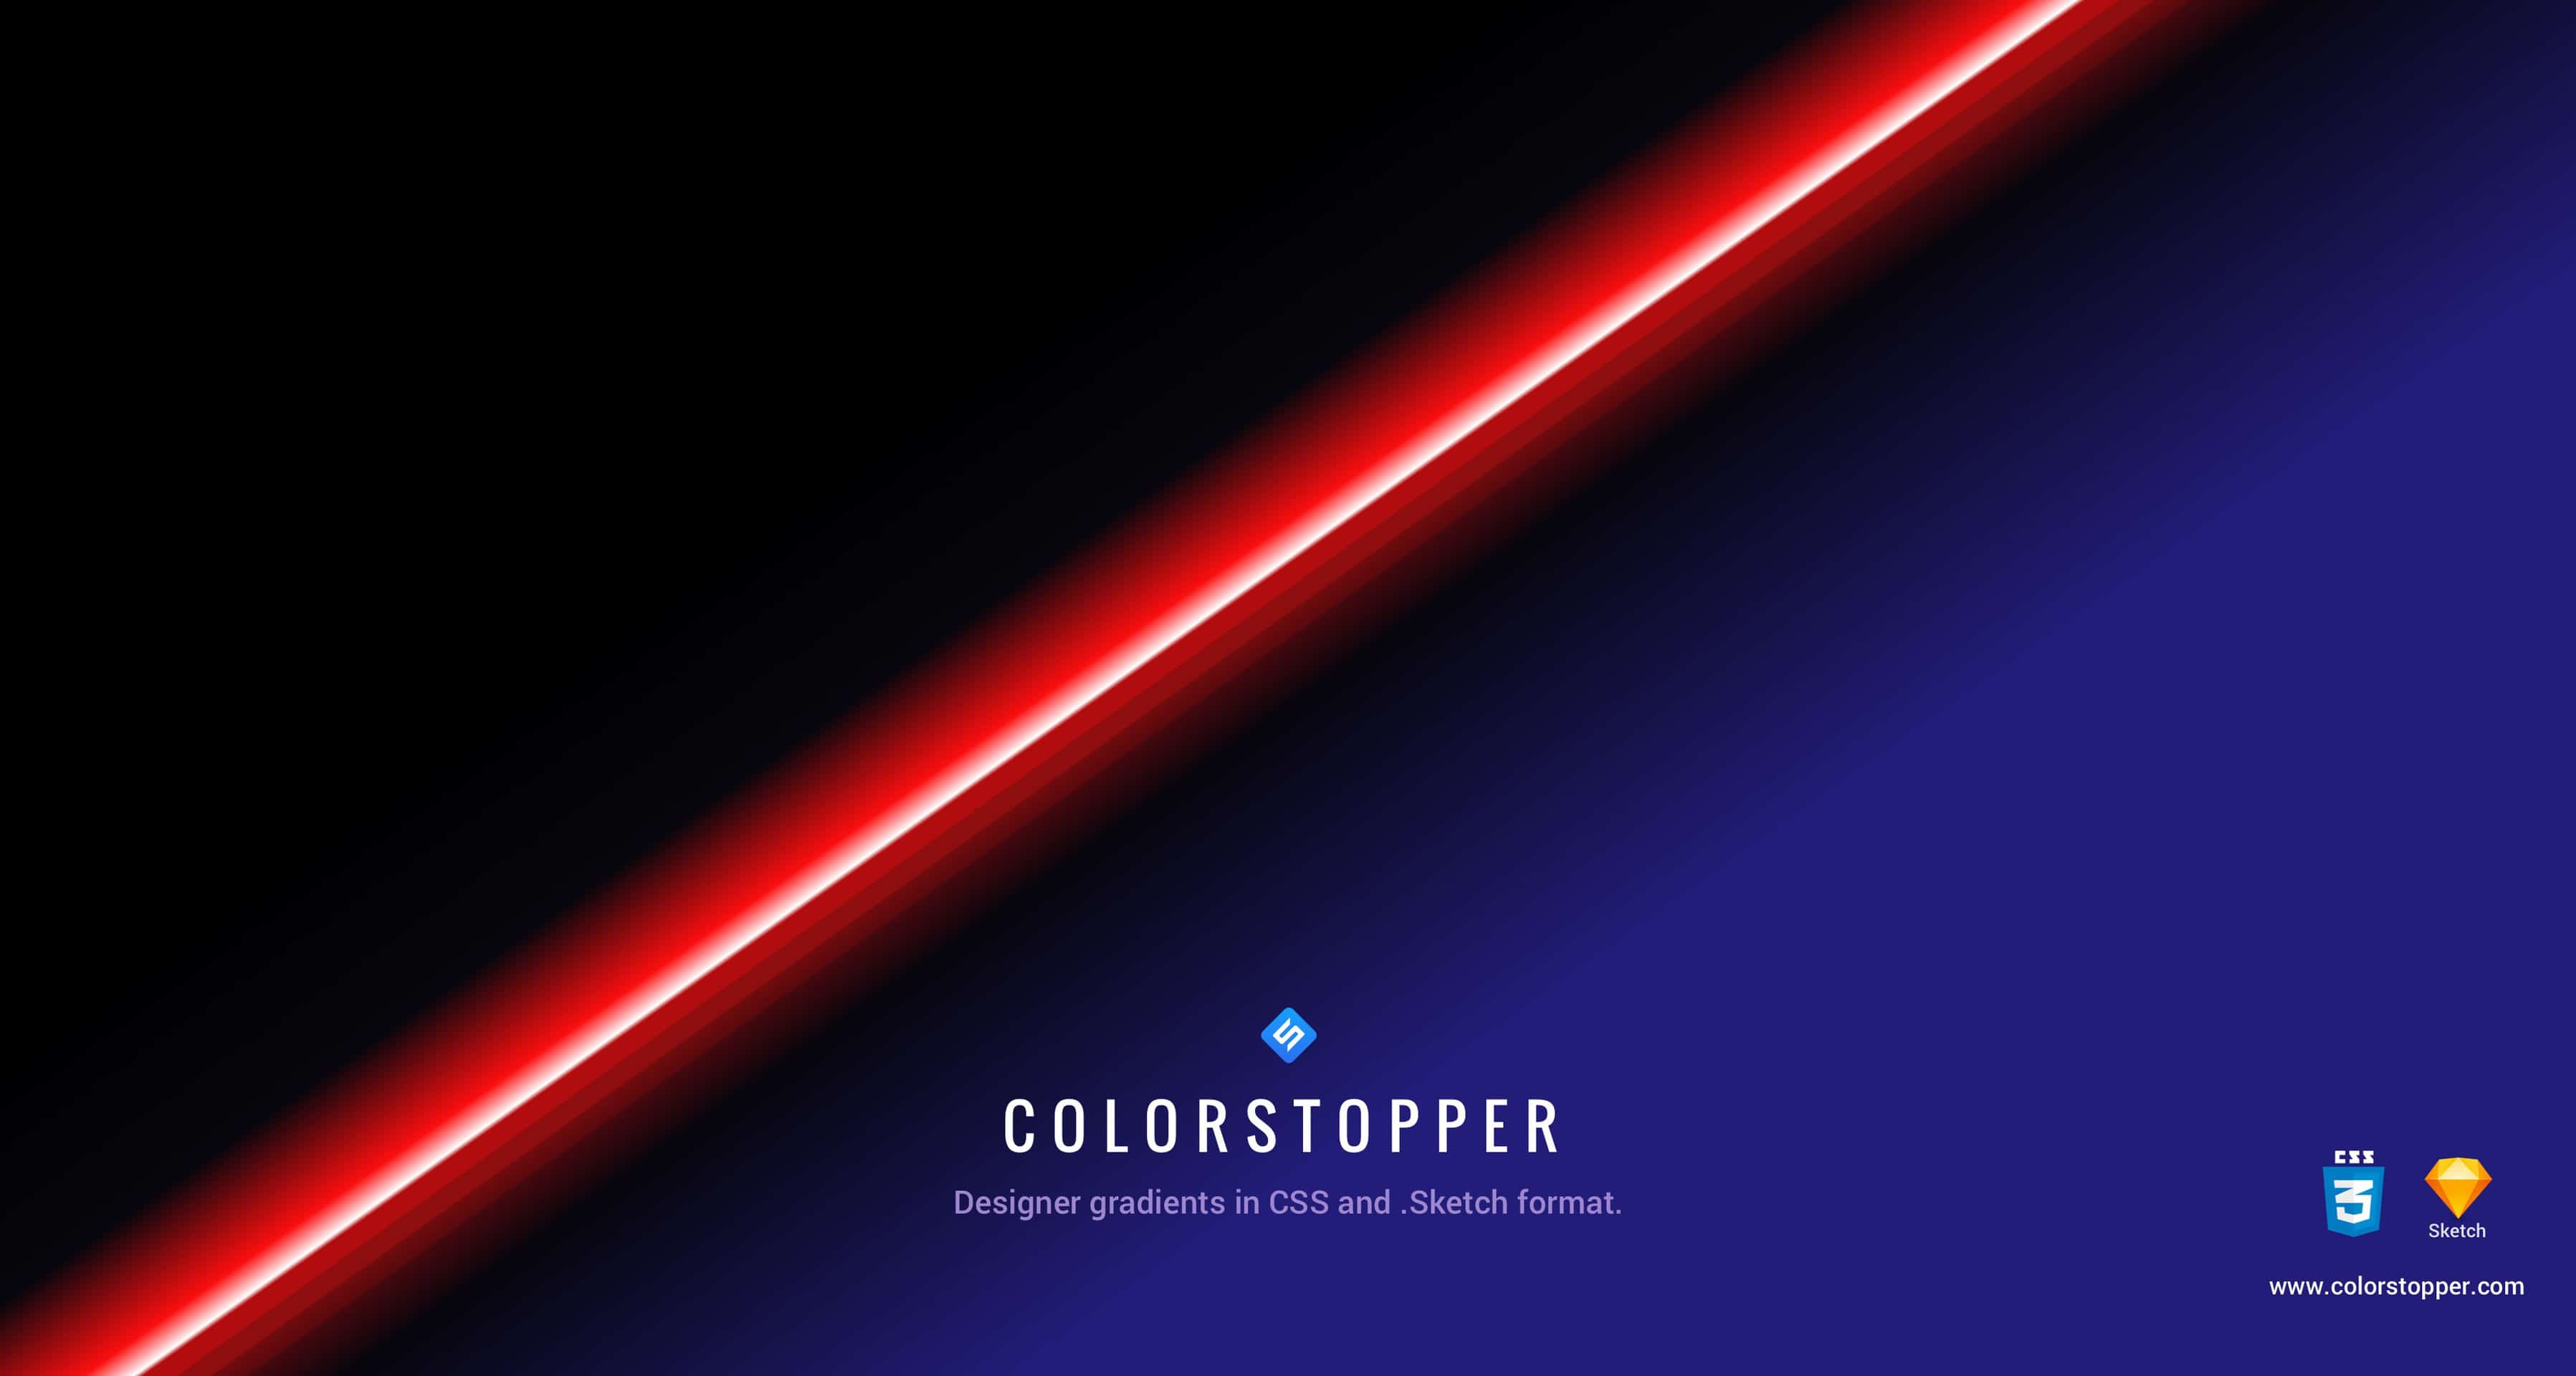 Colorstopper: Designer Gradients